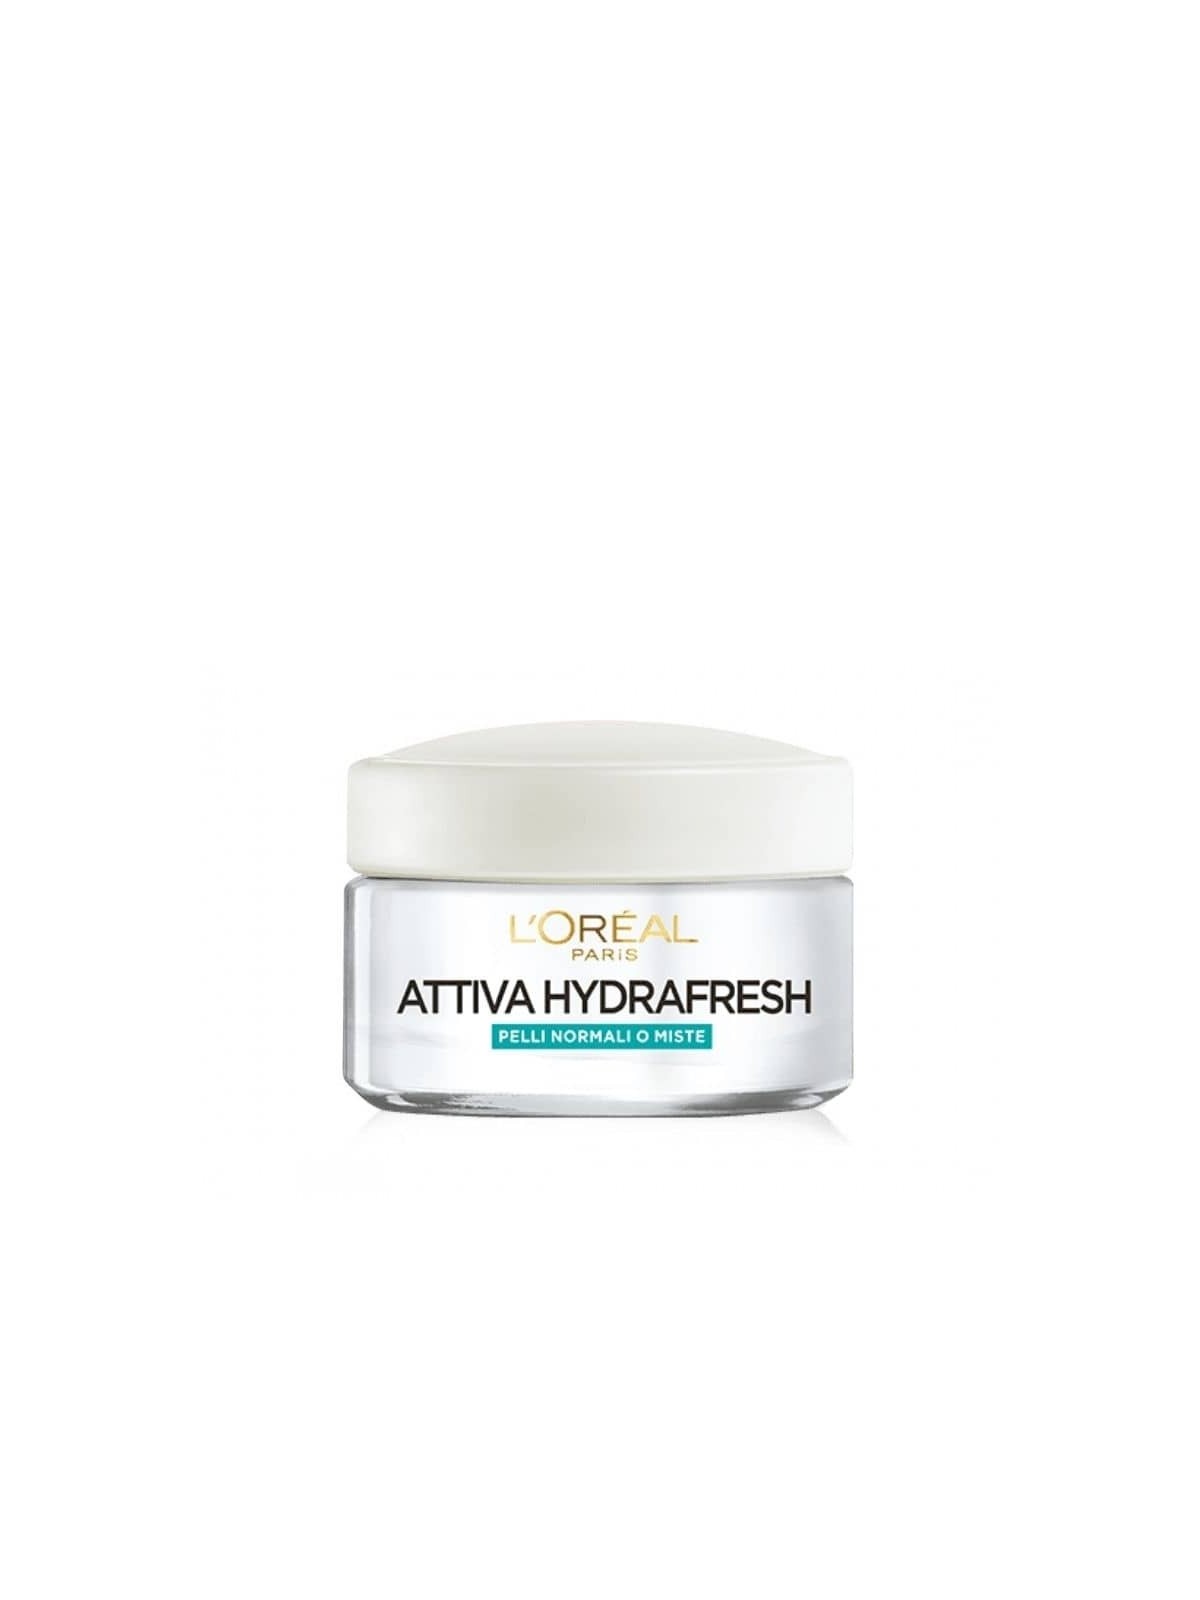 L'Oréal Paris Attiva Hydrafresh Gel-Crema